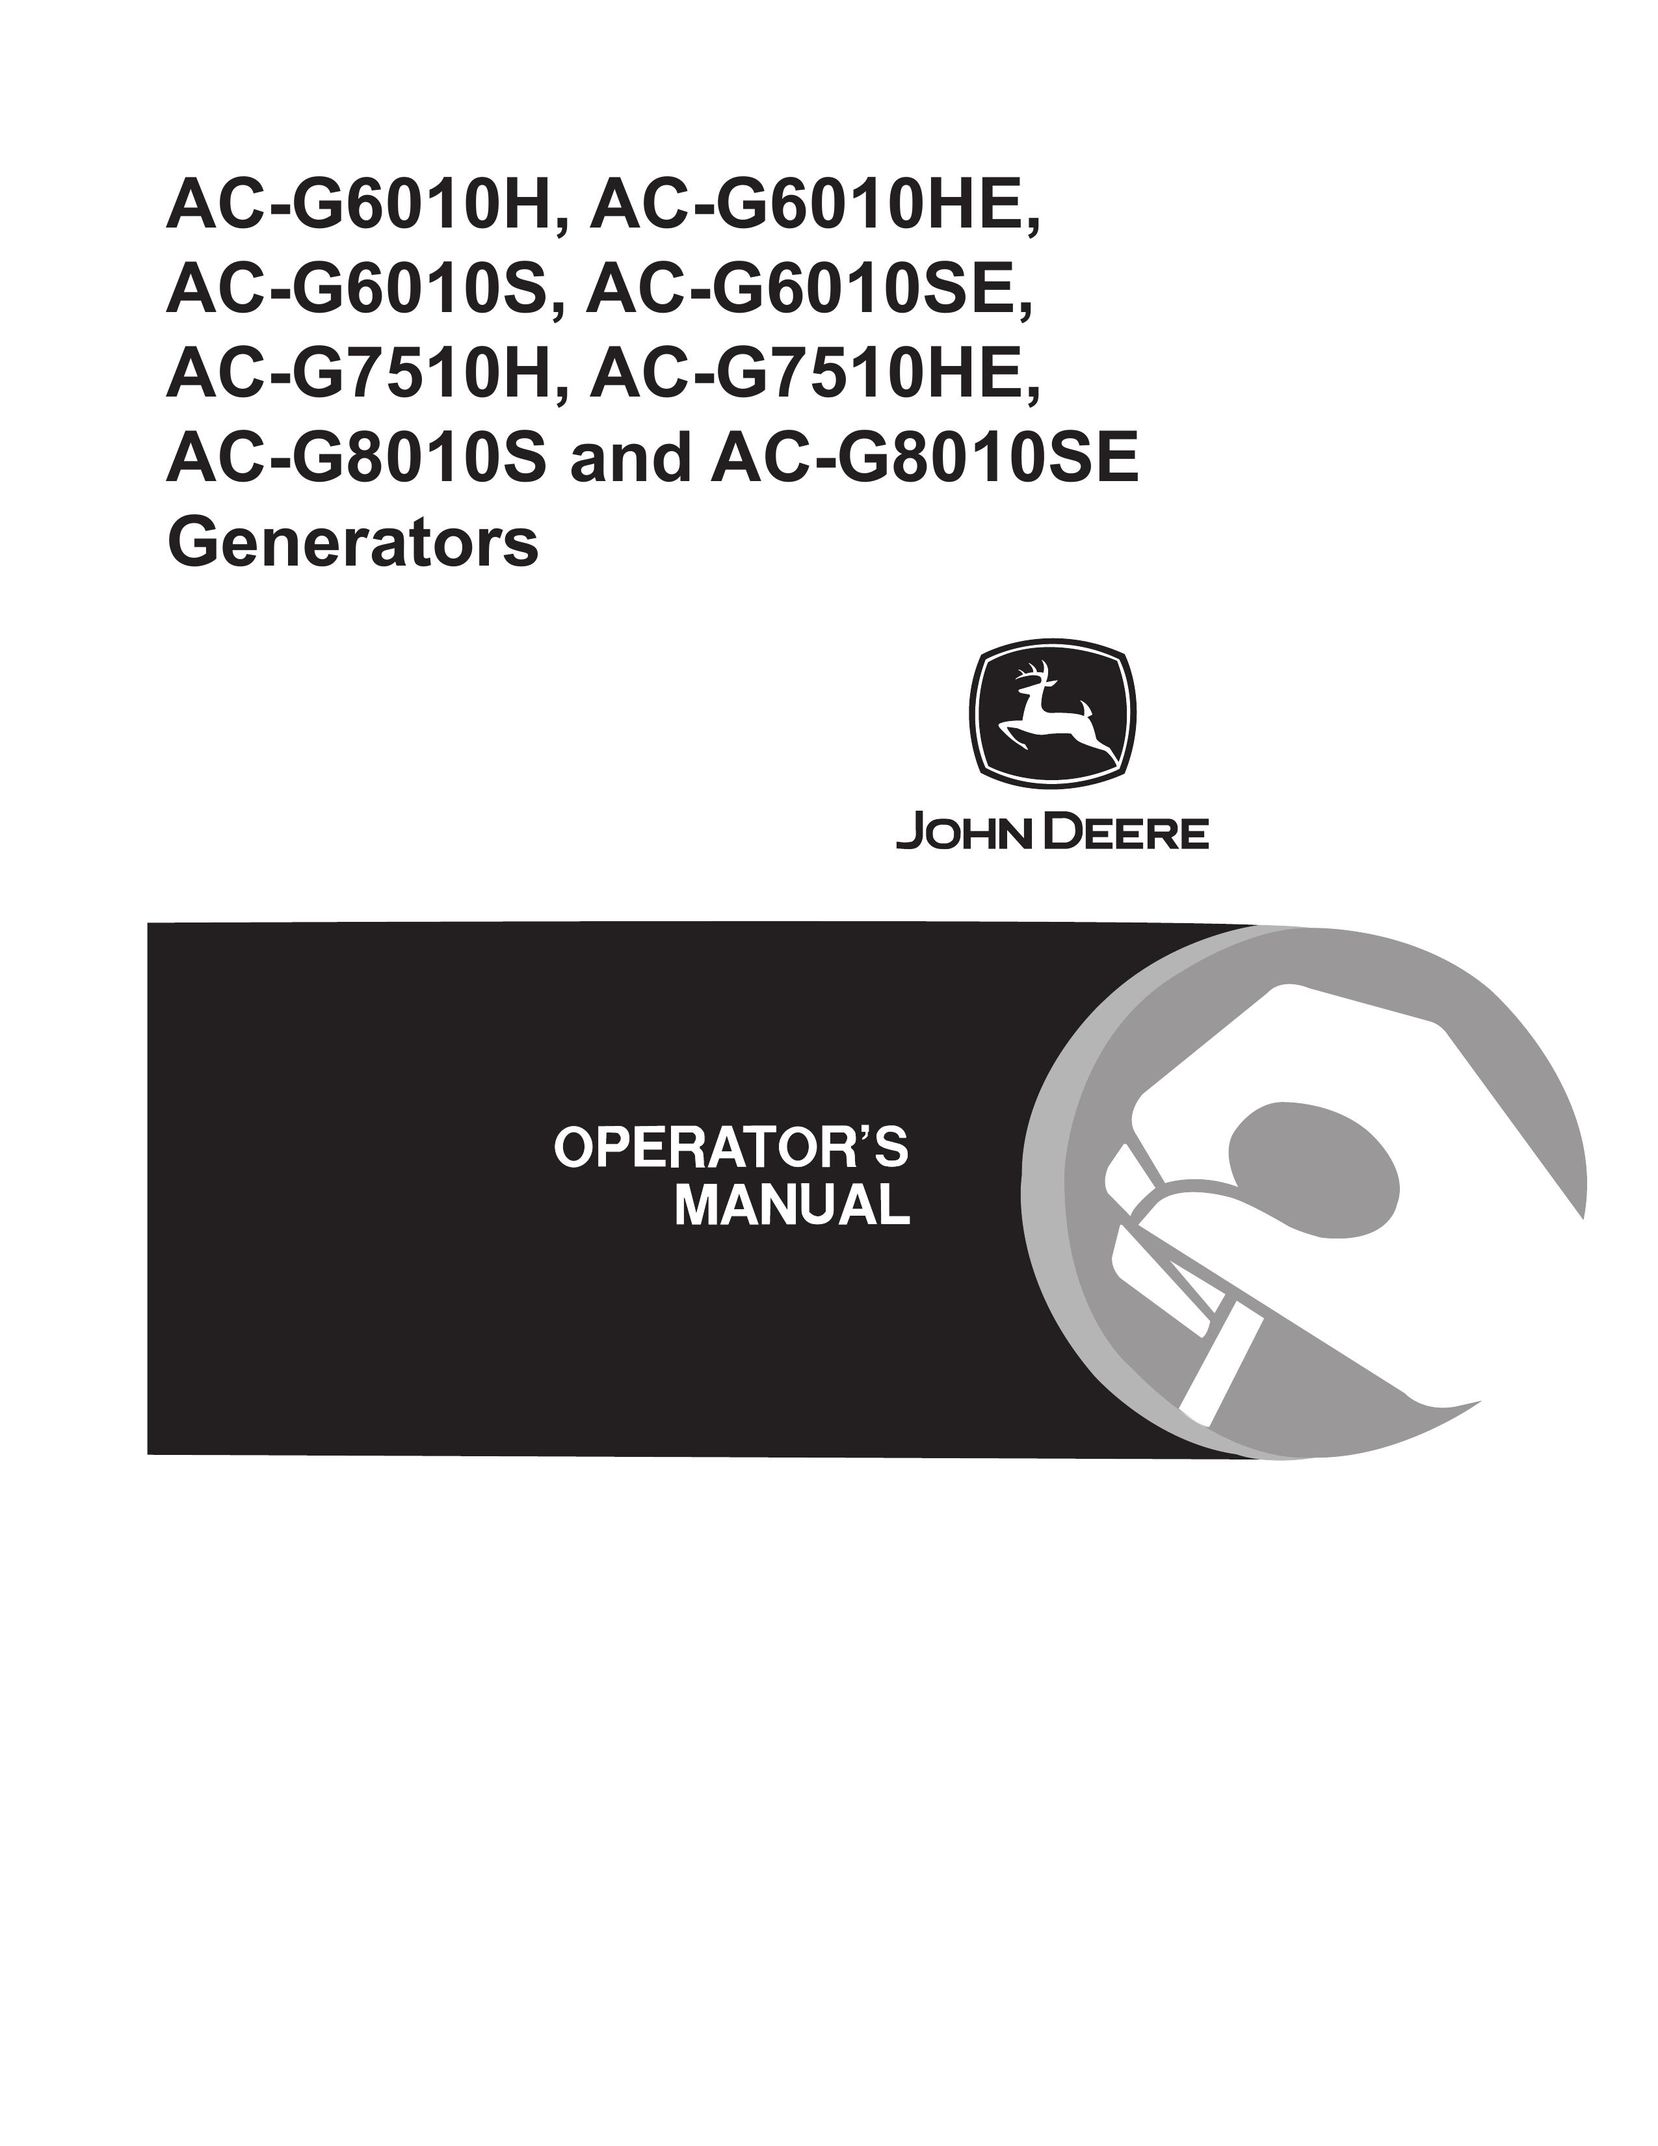 John Deere AC-G8010S Welding System User Manual